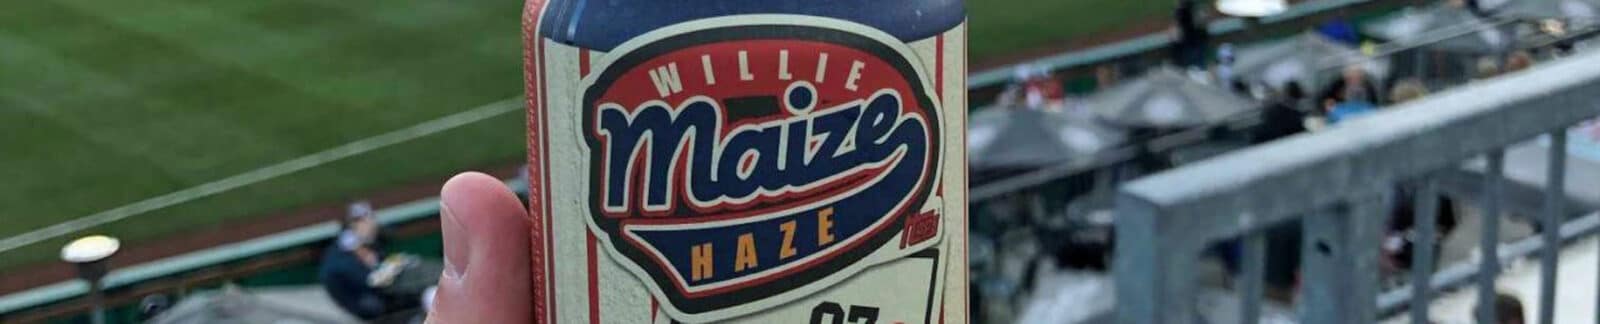 Willie Maize Haze - header